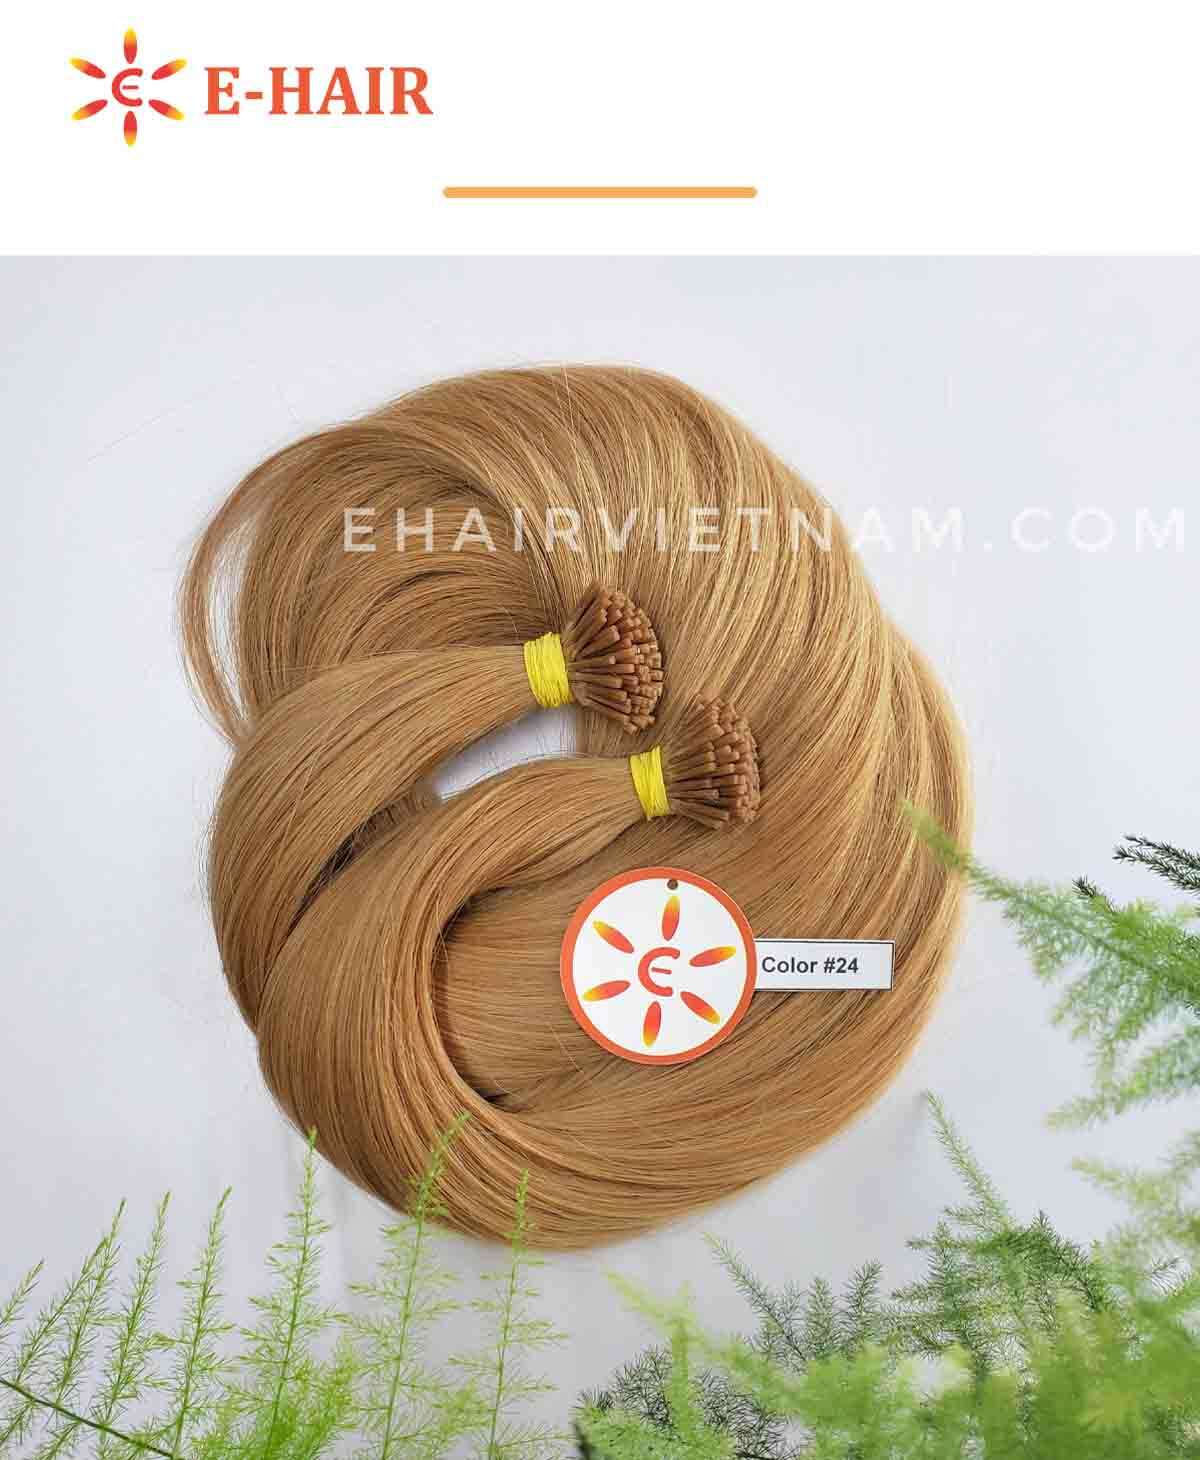 ehairvietnam, hair, wigs, vietnam hair, natural hair, export hair